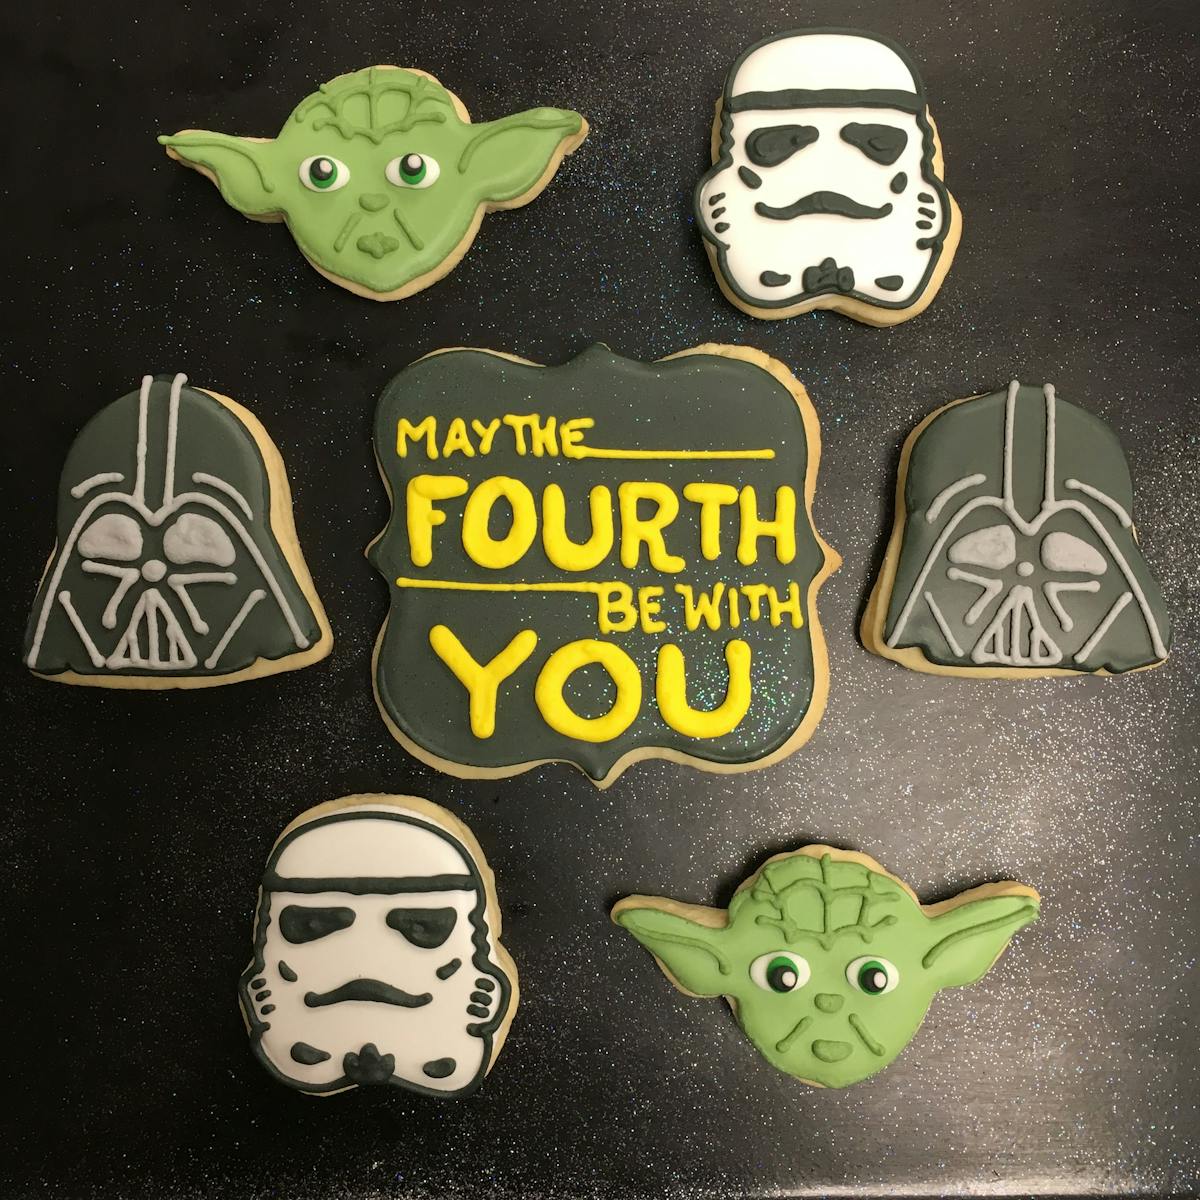 Star Wars themed cookies